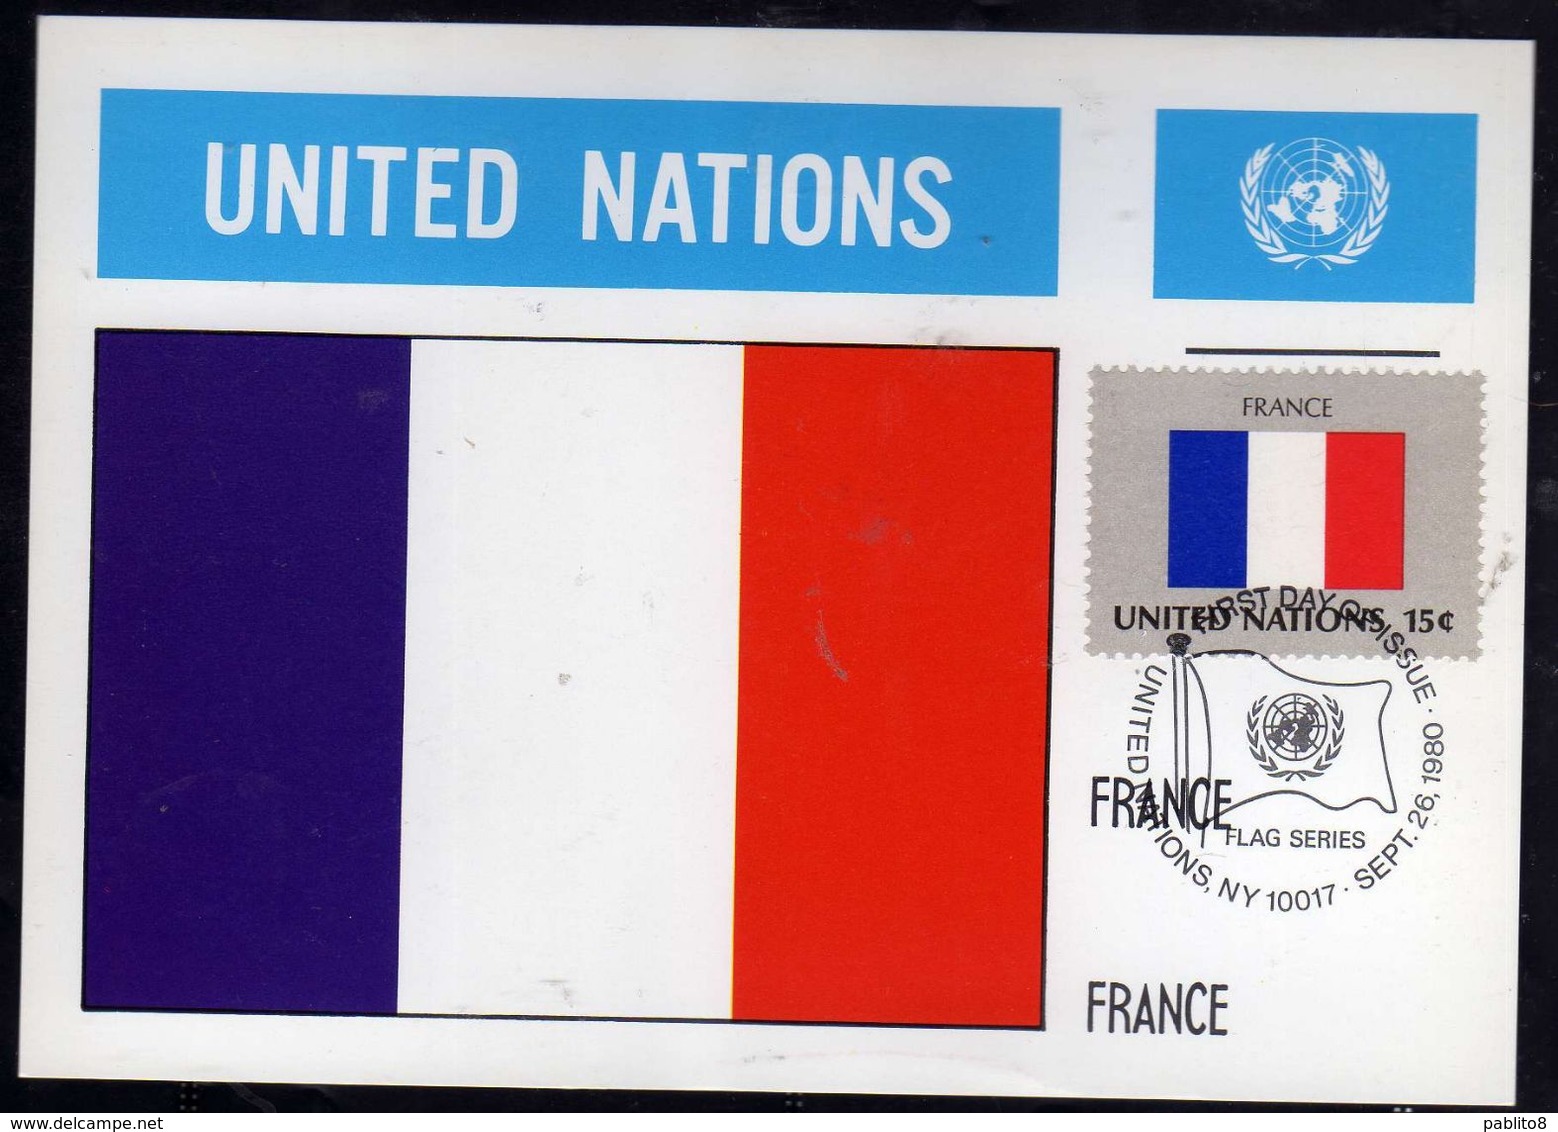 UNITED NATIONS NEW YORK ONU UN UNO 26 9 1980 FLAGS FRANCE FRANCIA FDC MAXI CARD CARTOLINA MAXIMUM - Maximum Cards